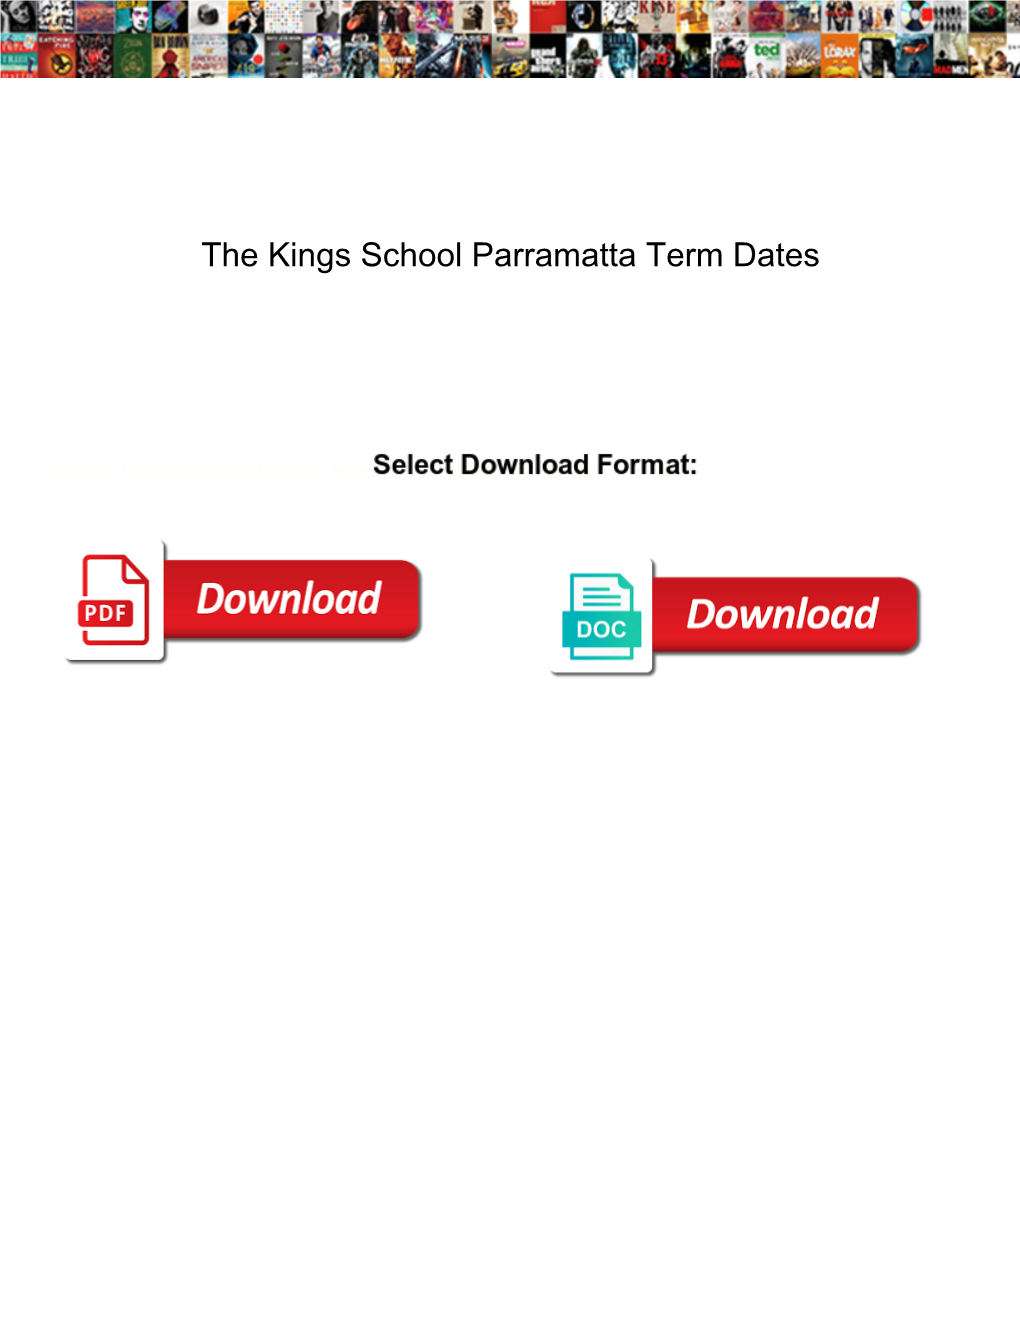 The Kings School Parramatta Term Dates